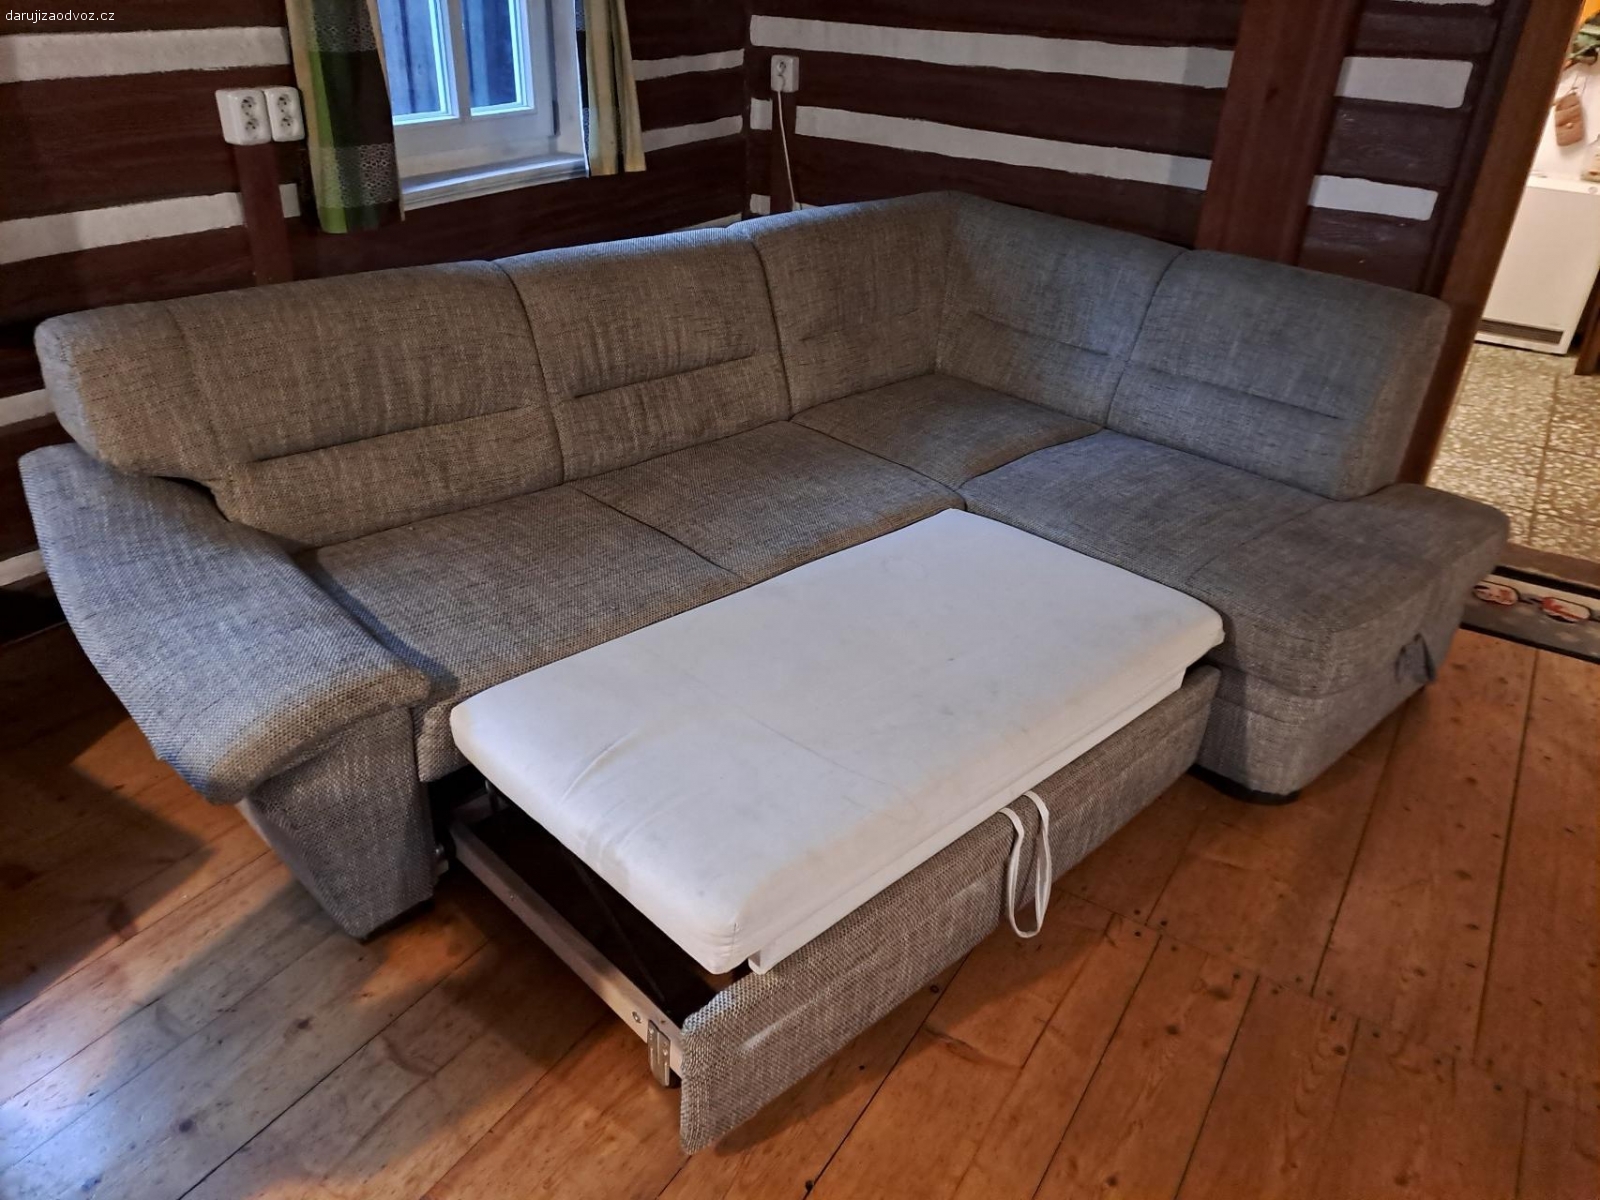 gauč s rozkládací  postelí. používaný  gauč s rozkládací postelí,  vše funkční,  opěradlo je zdeformované, viz. foto. Prosím pouze SMS na tel.